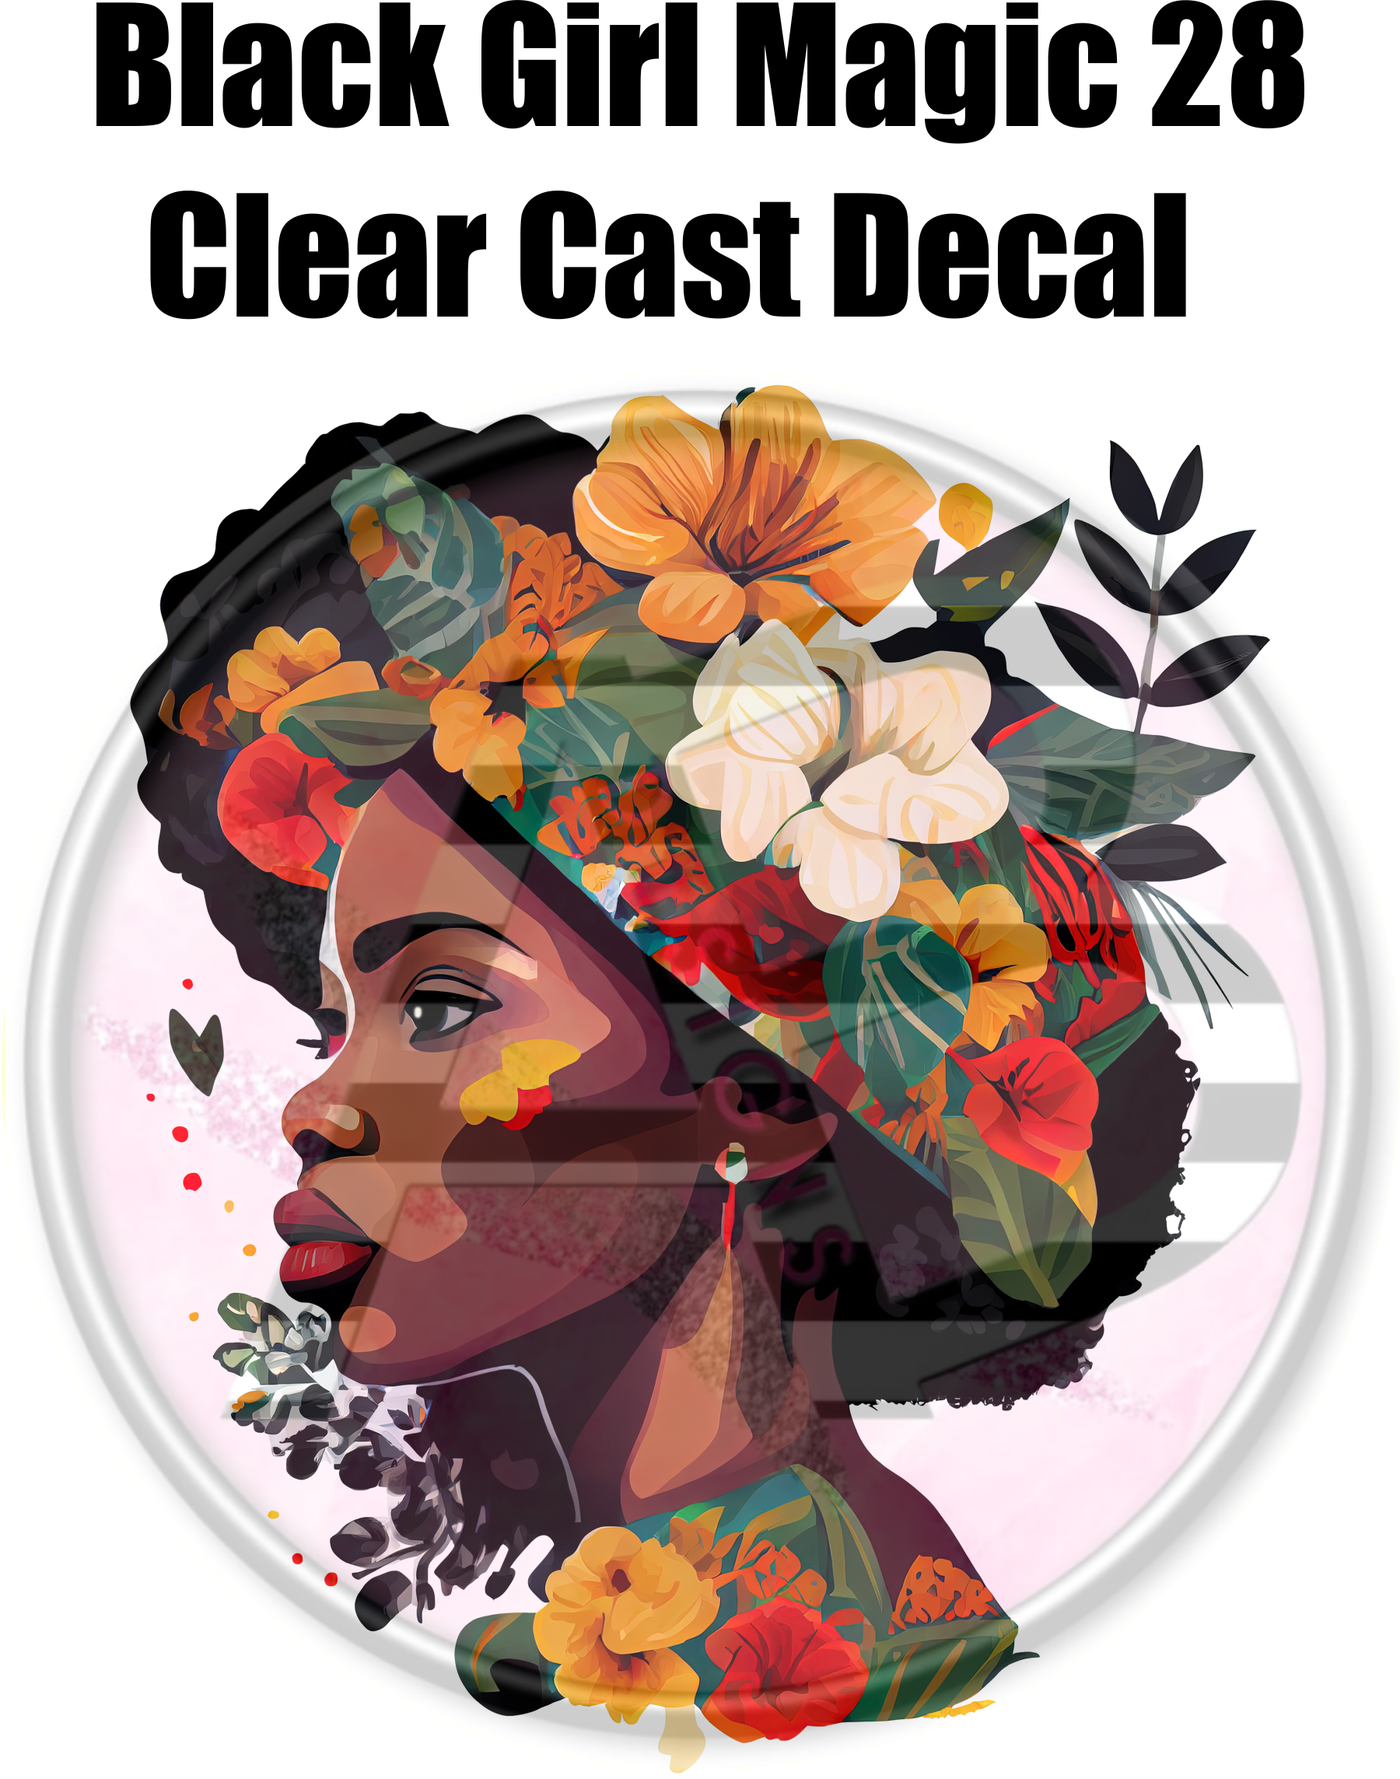 Black Girl Magic 28 - Clear Cast Decal